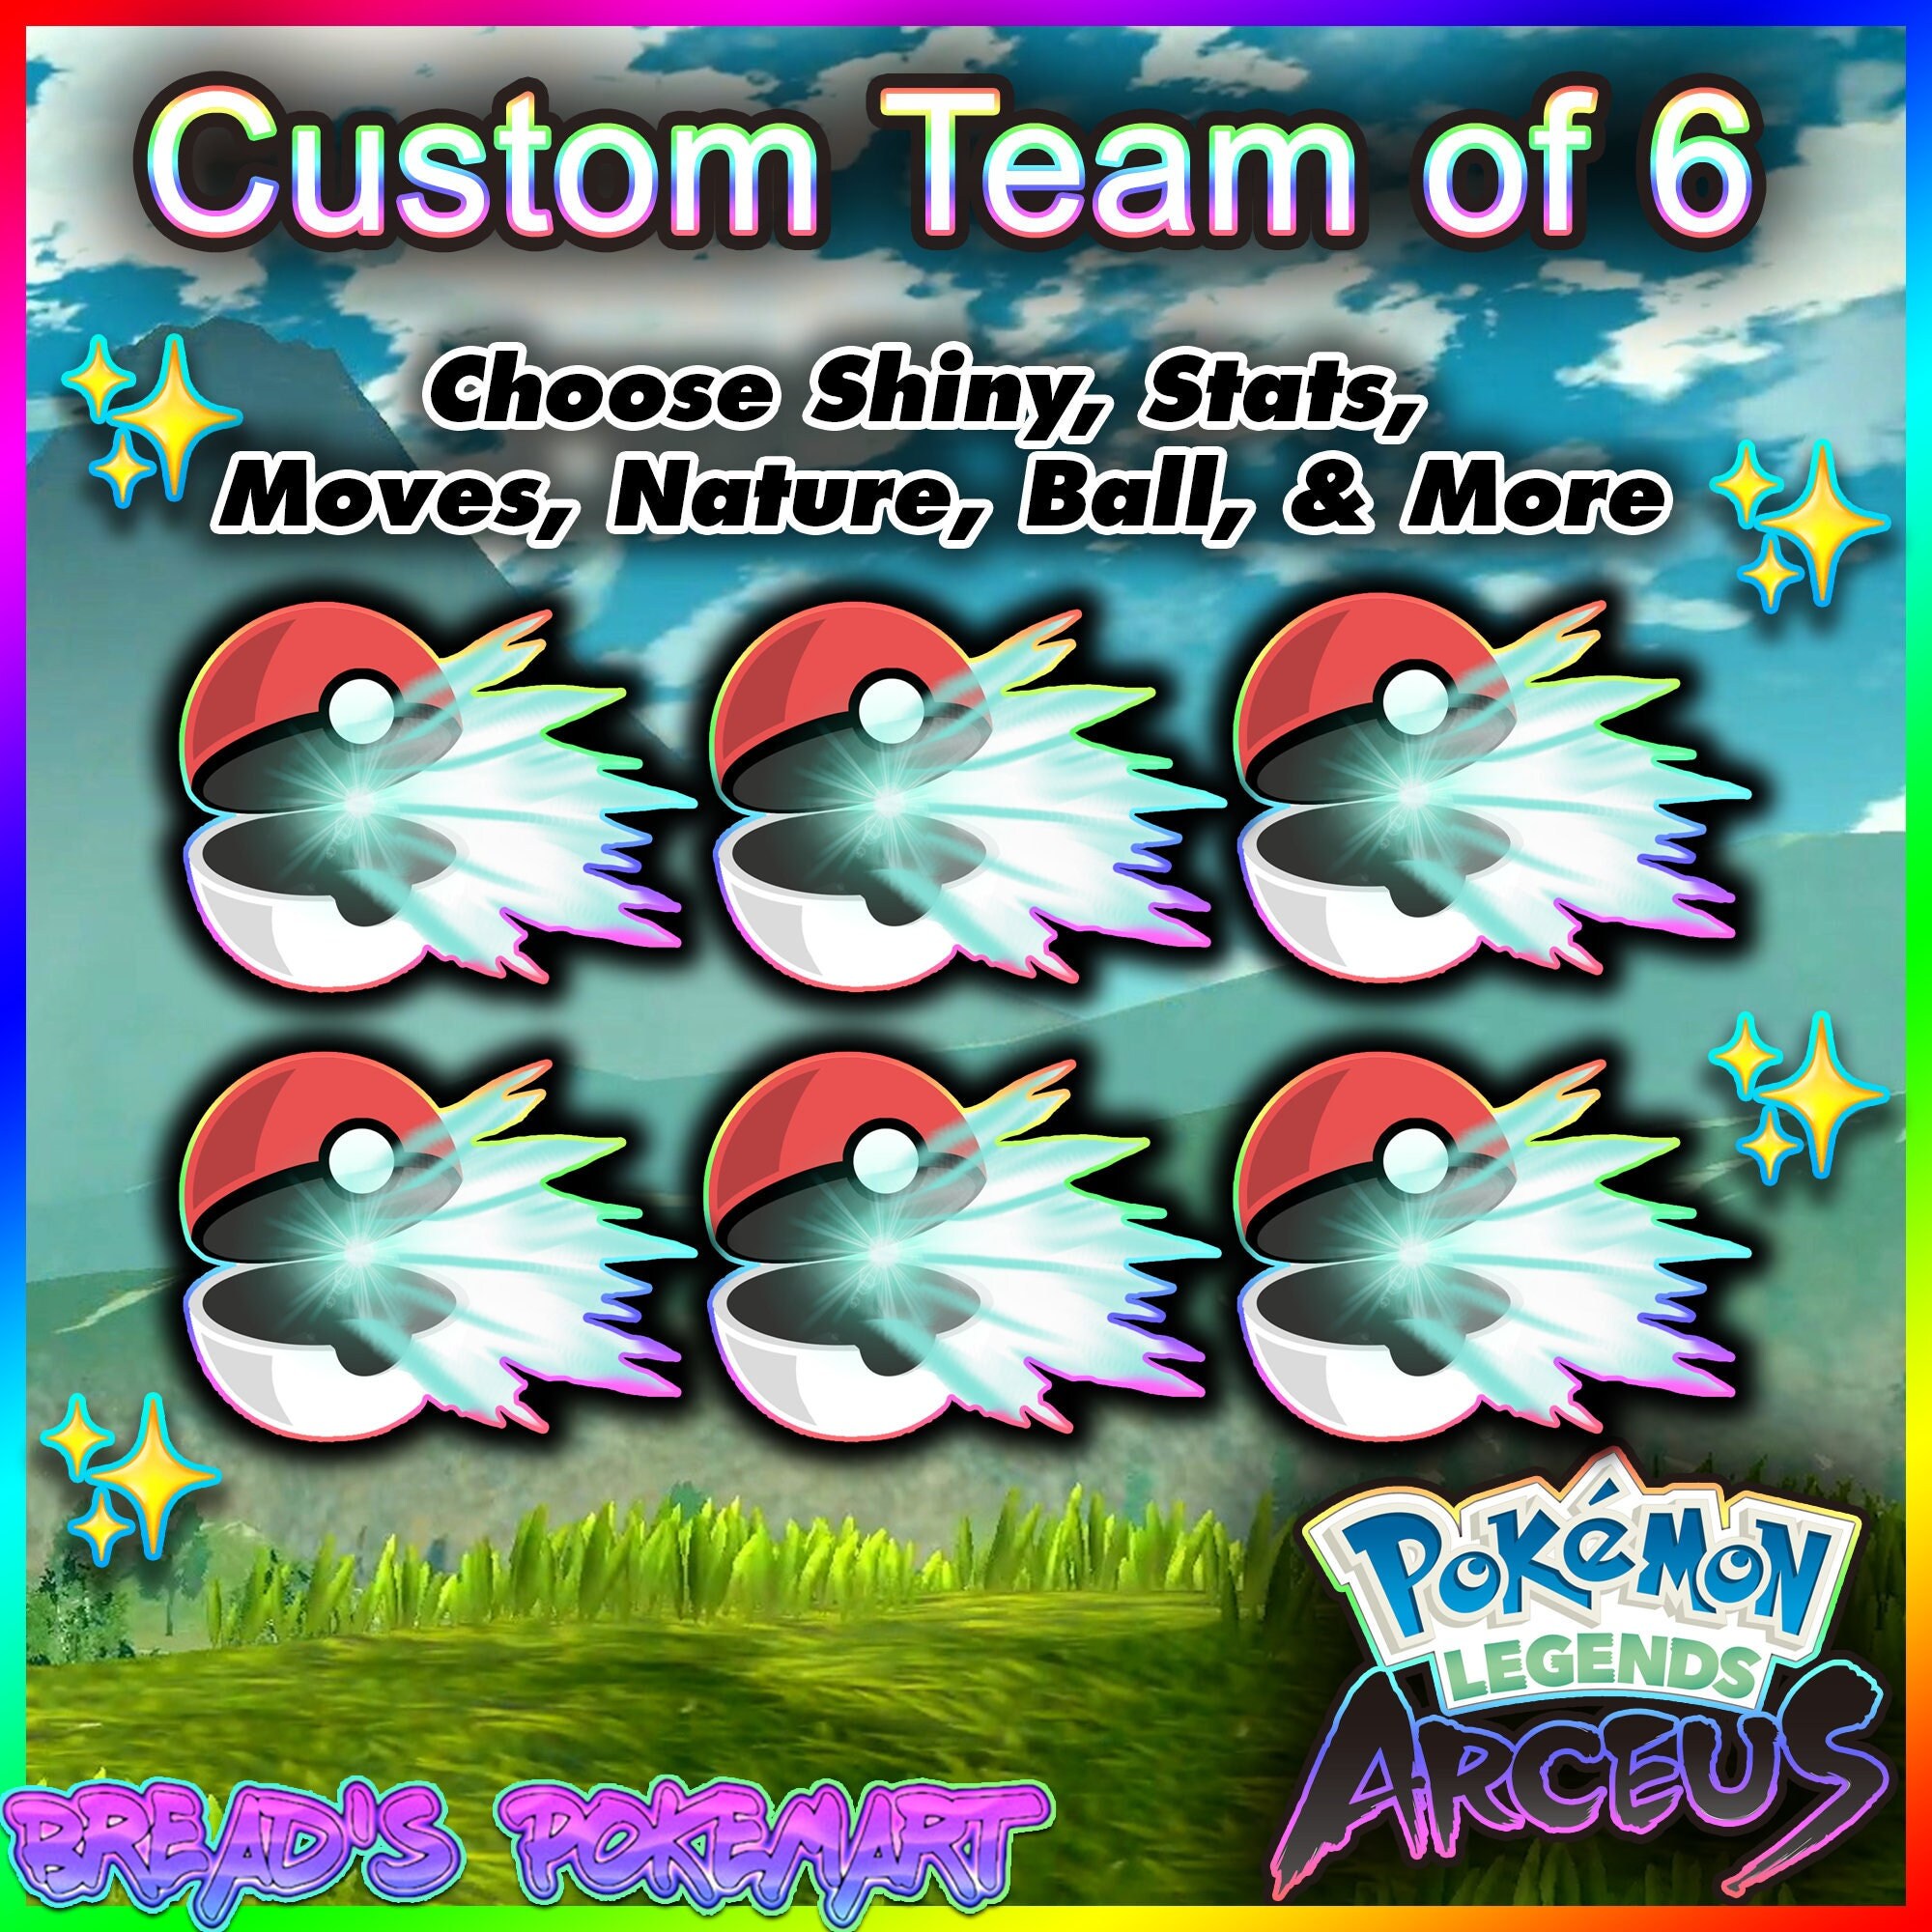 Pick 6 (Six) Custom Pokemon – Choose your 6 Custom Shiny 6IV Pokemon